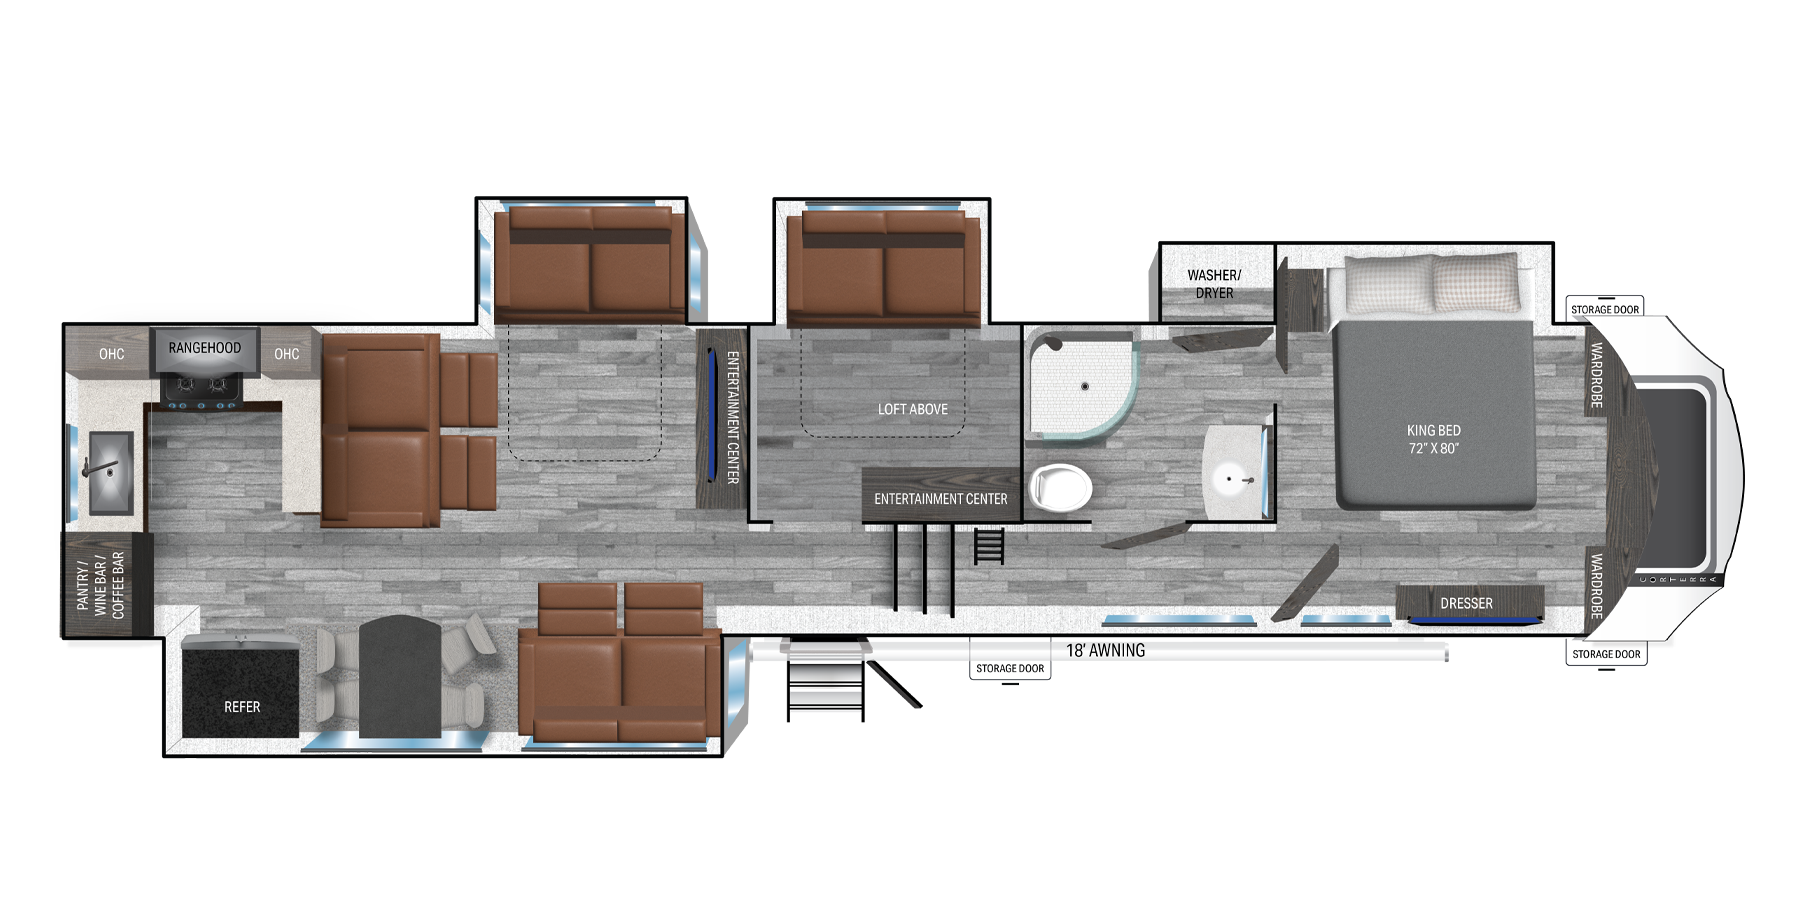 Heartland RV Corterra 3.7 fifth wheel travel trailer - floorplan